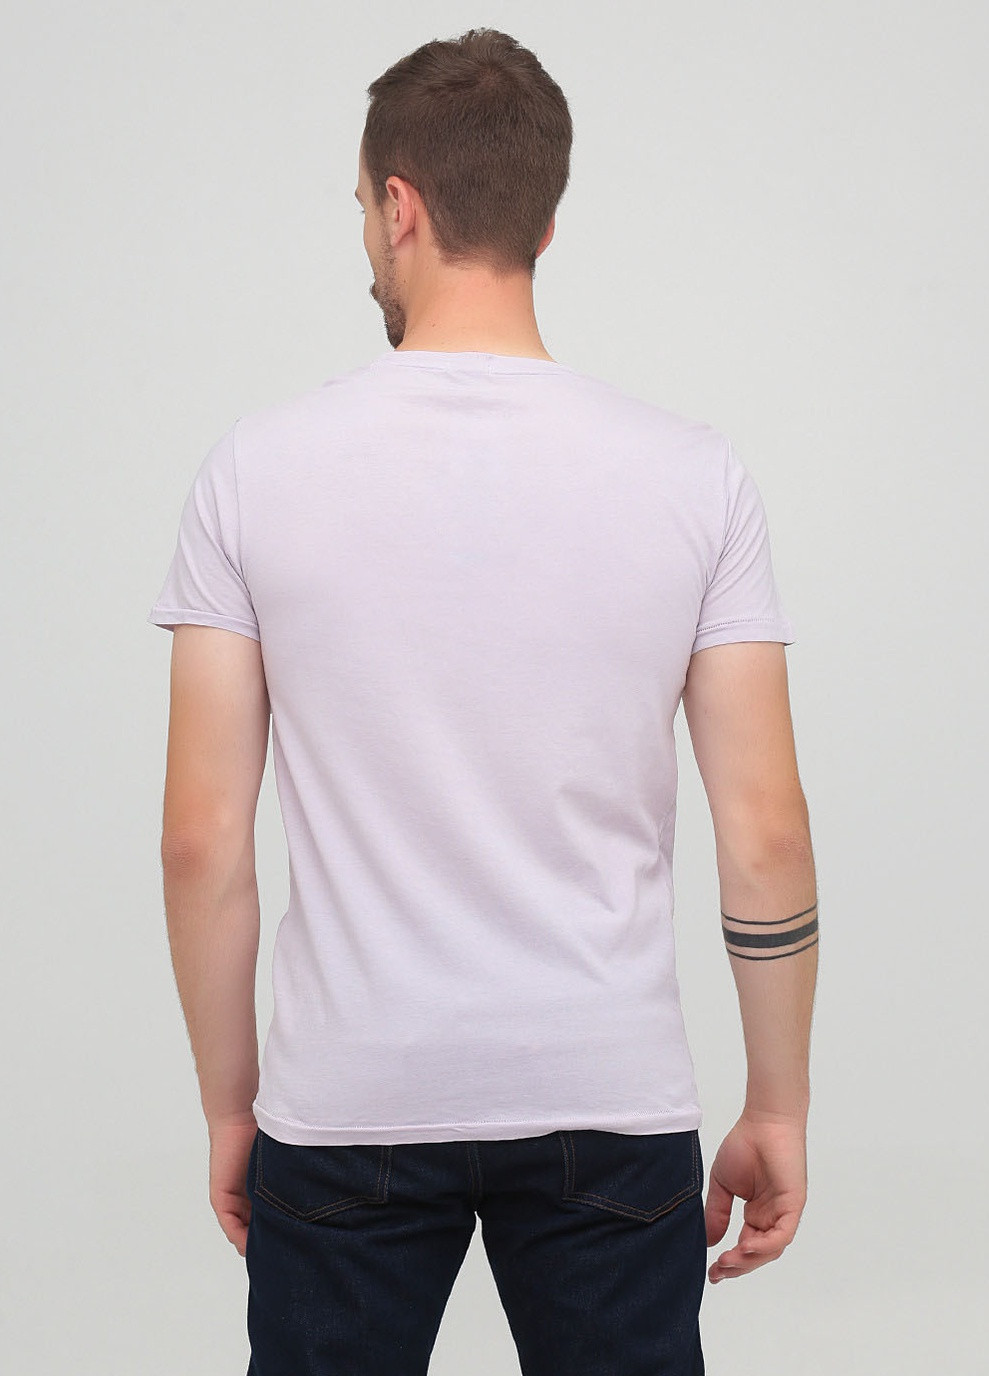 Розовая футболка Urban Outfitters